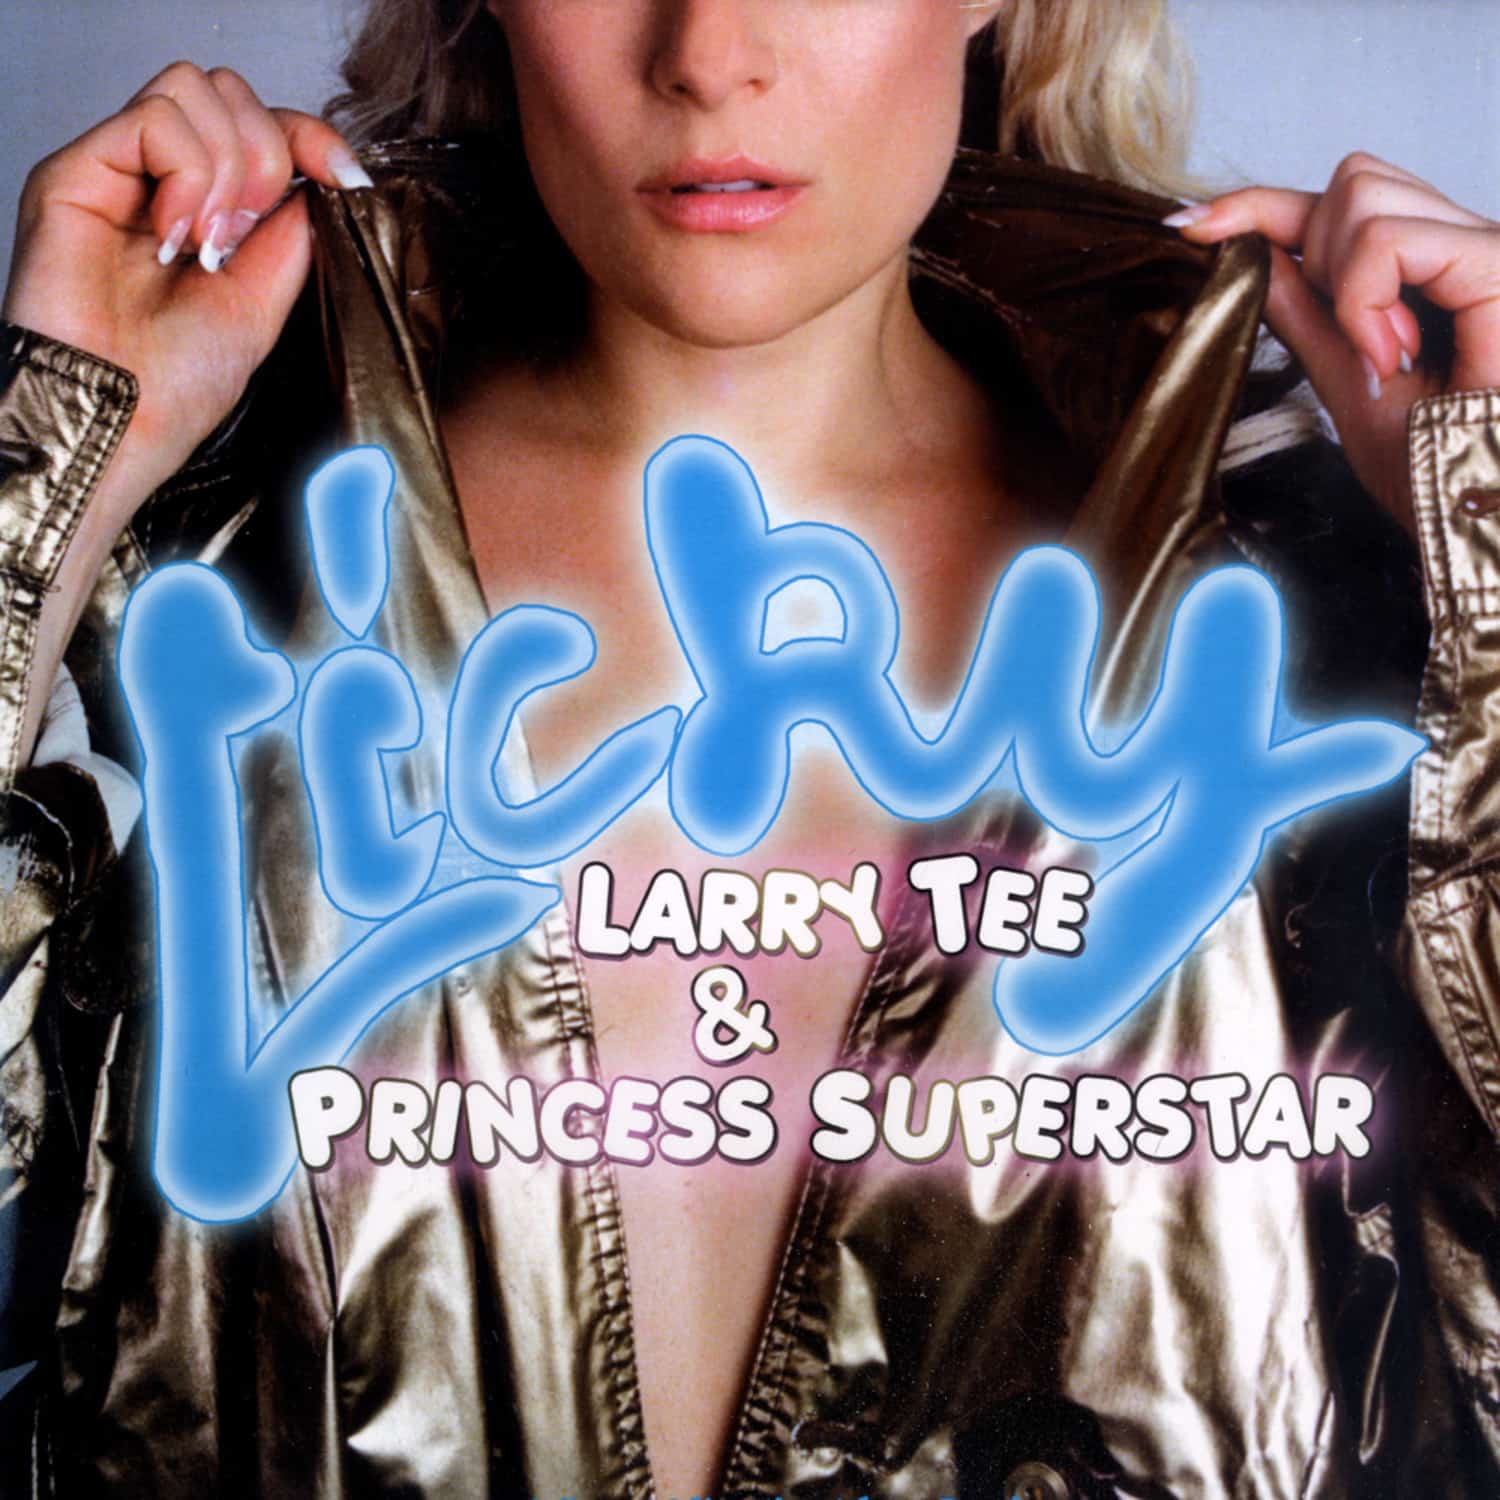 Larry Tee & Princess Superstar - LICKY PART 2